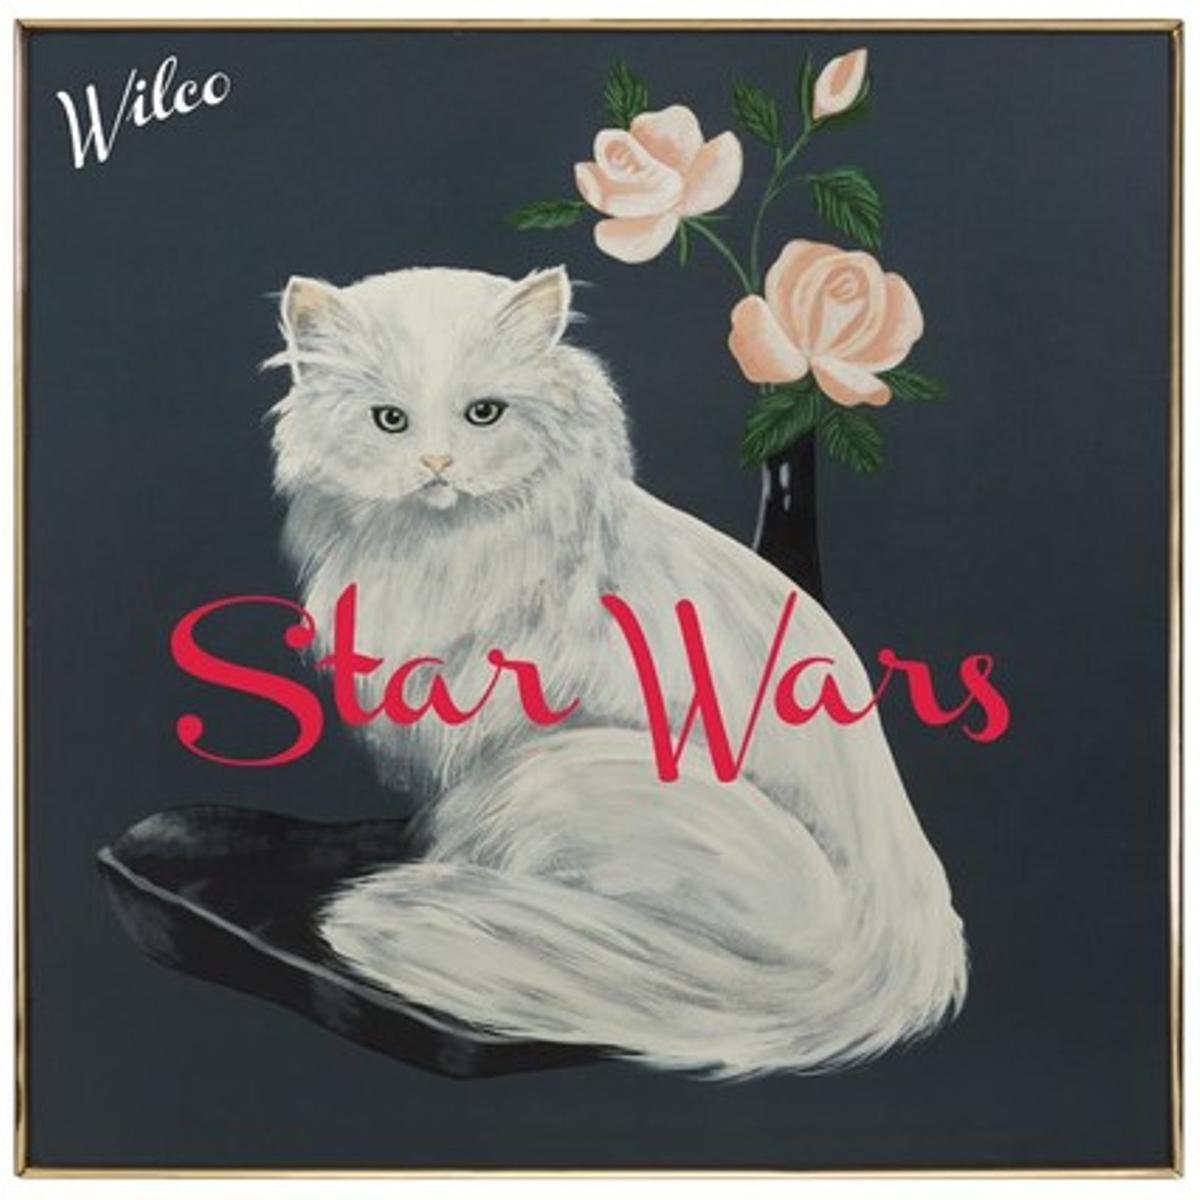 Portada de ’Star Wars’, el nou disc de la banda ’Wilco’.